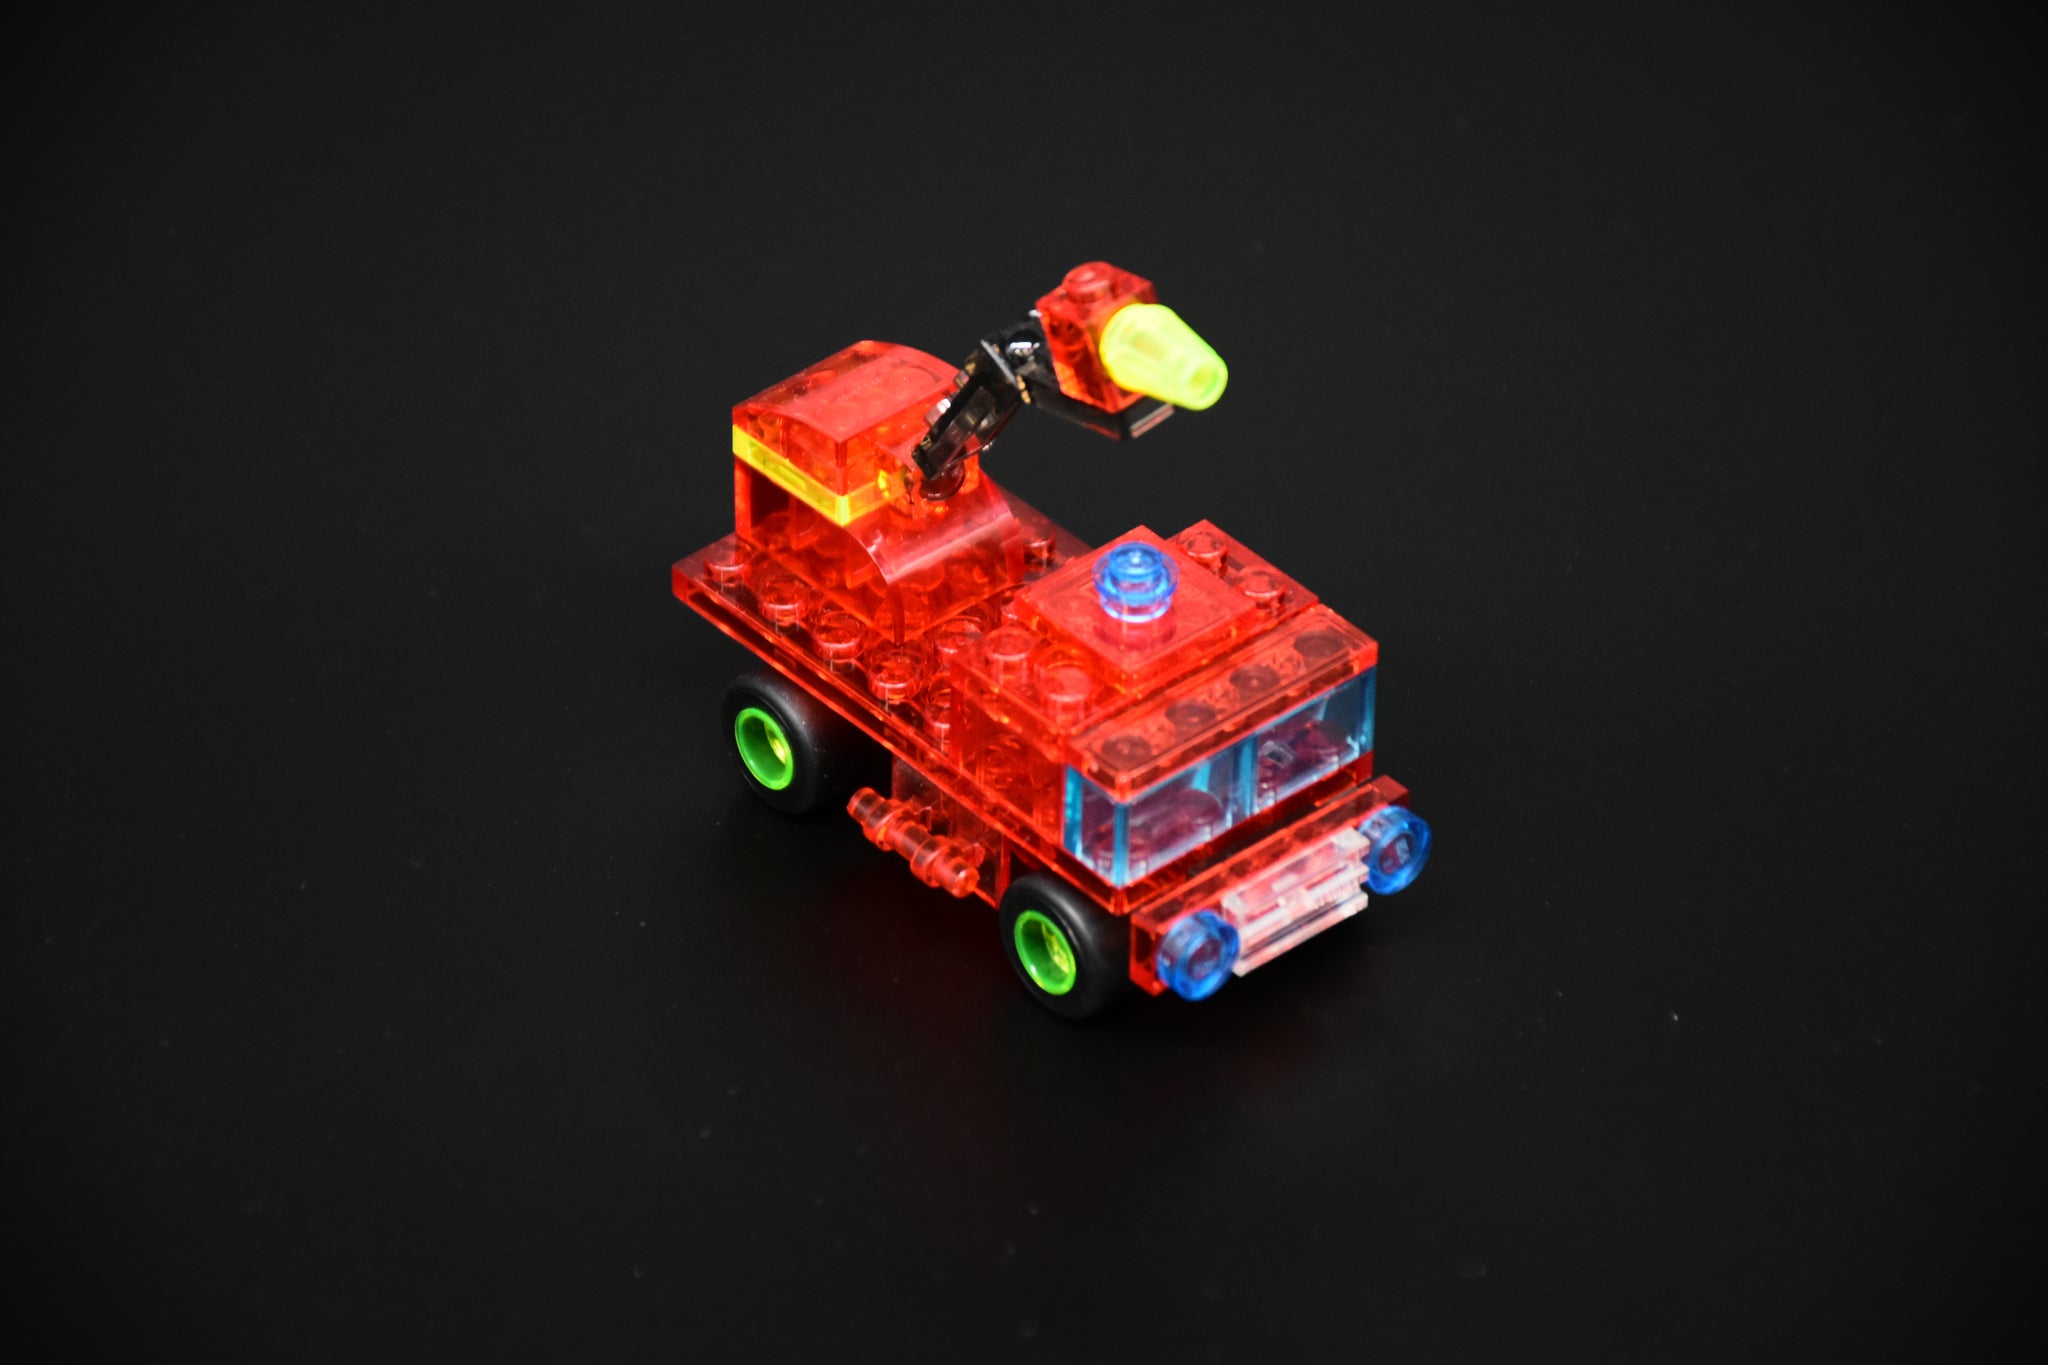 8-in-1 Robot Building Block Set, 8 Mini Toys Transform Into 1 Large Robot Toy (318 Pieces)